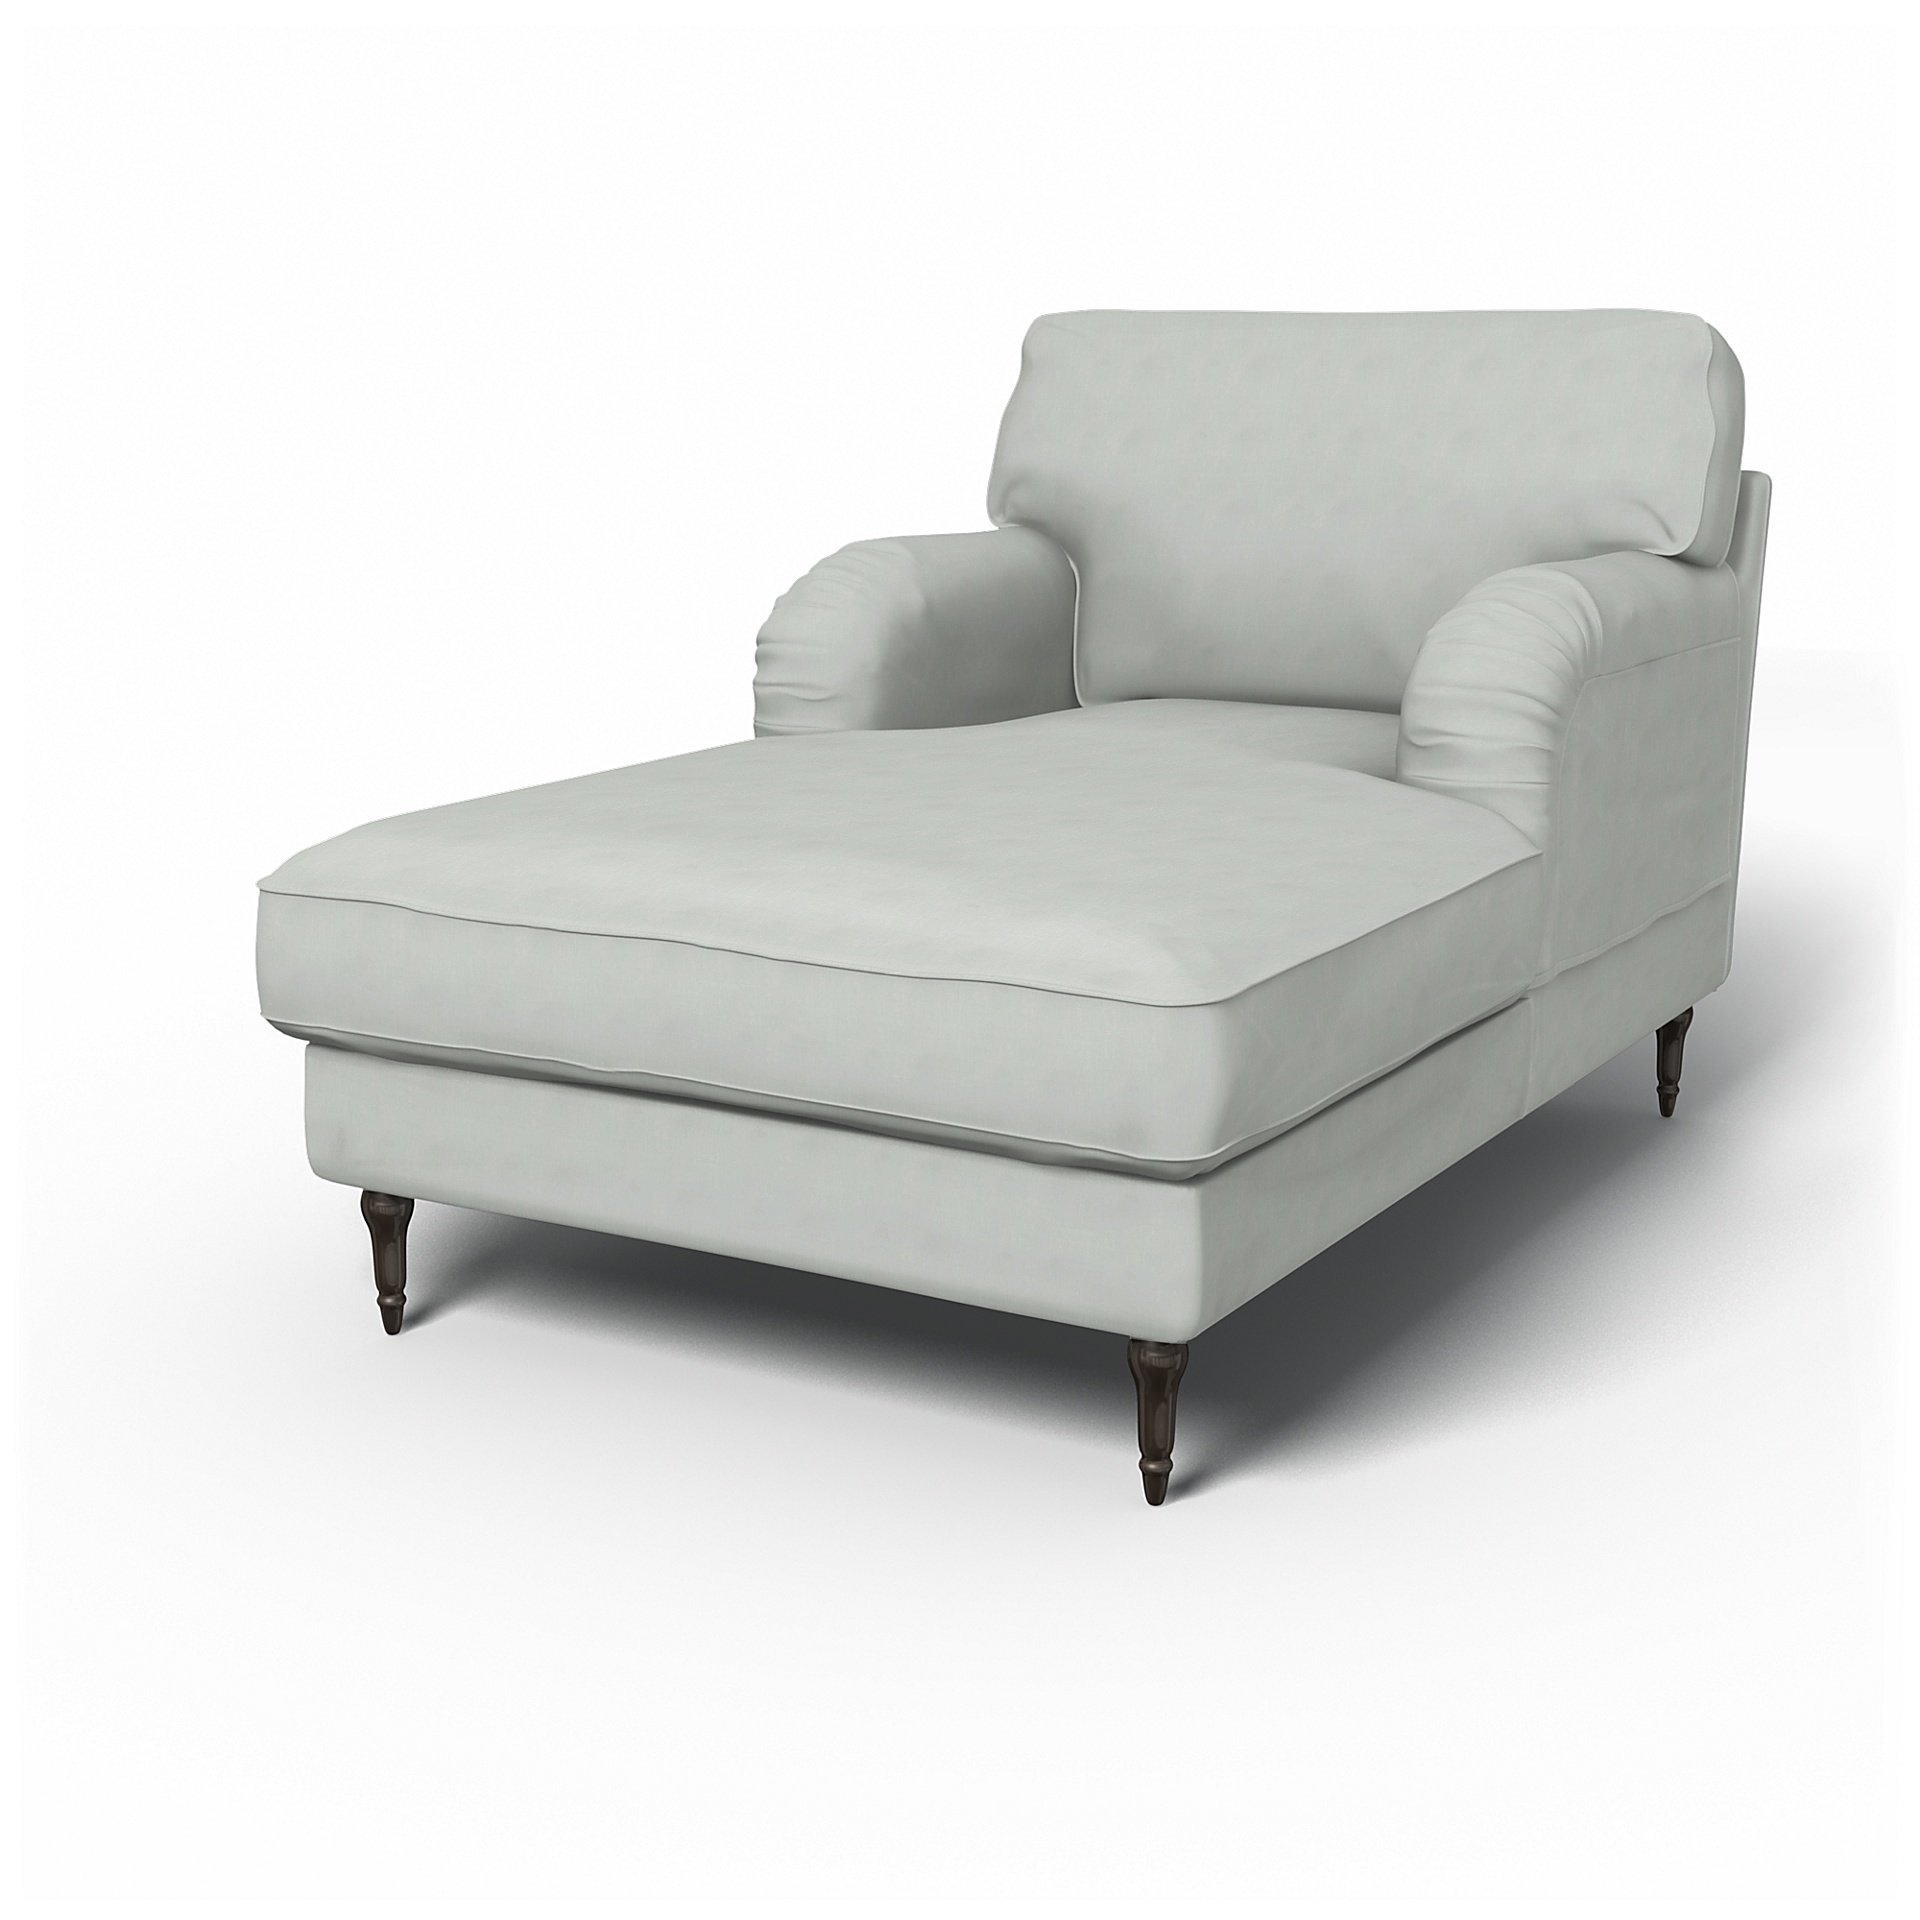 IKEA - Stocksund Chaise Longue Cover, Silver Grey, Linen - Bemz